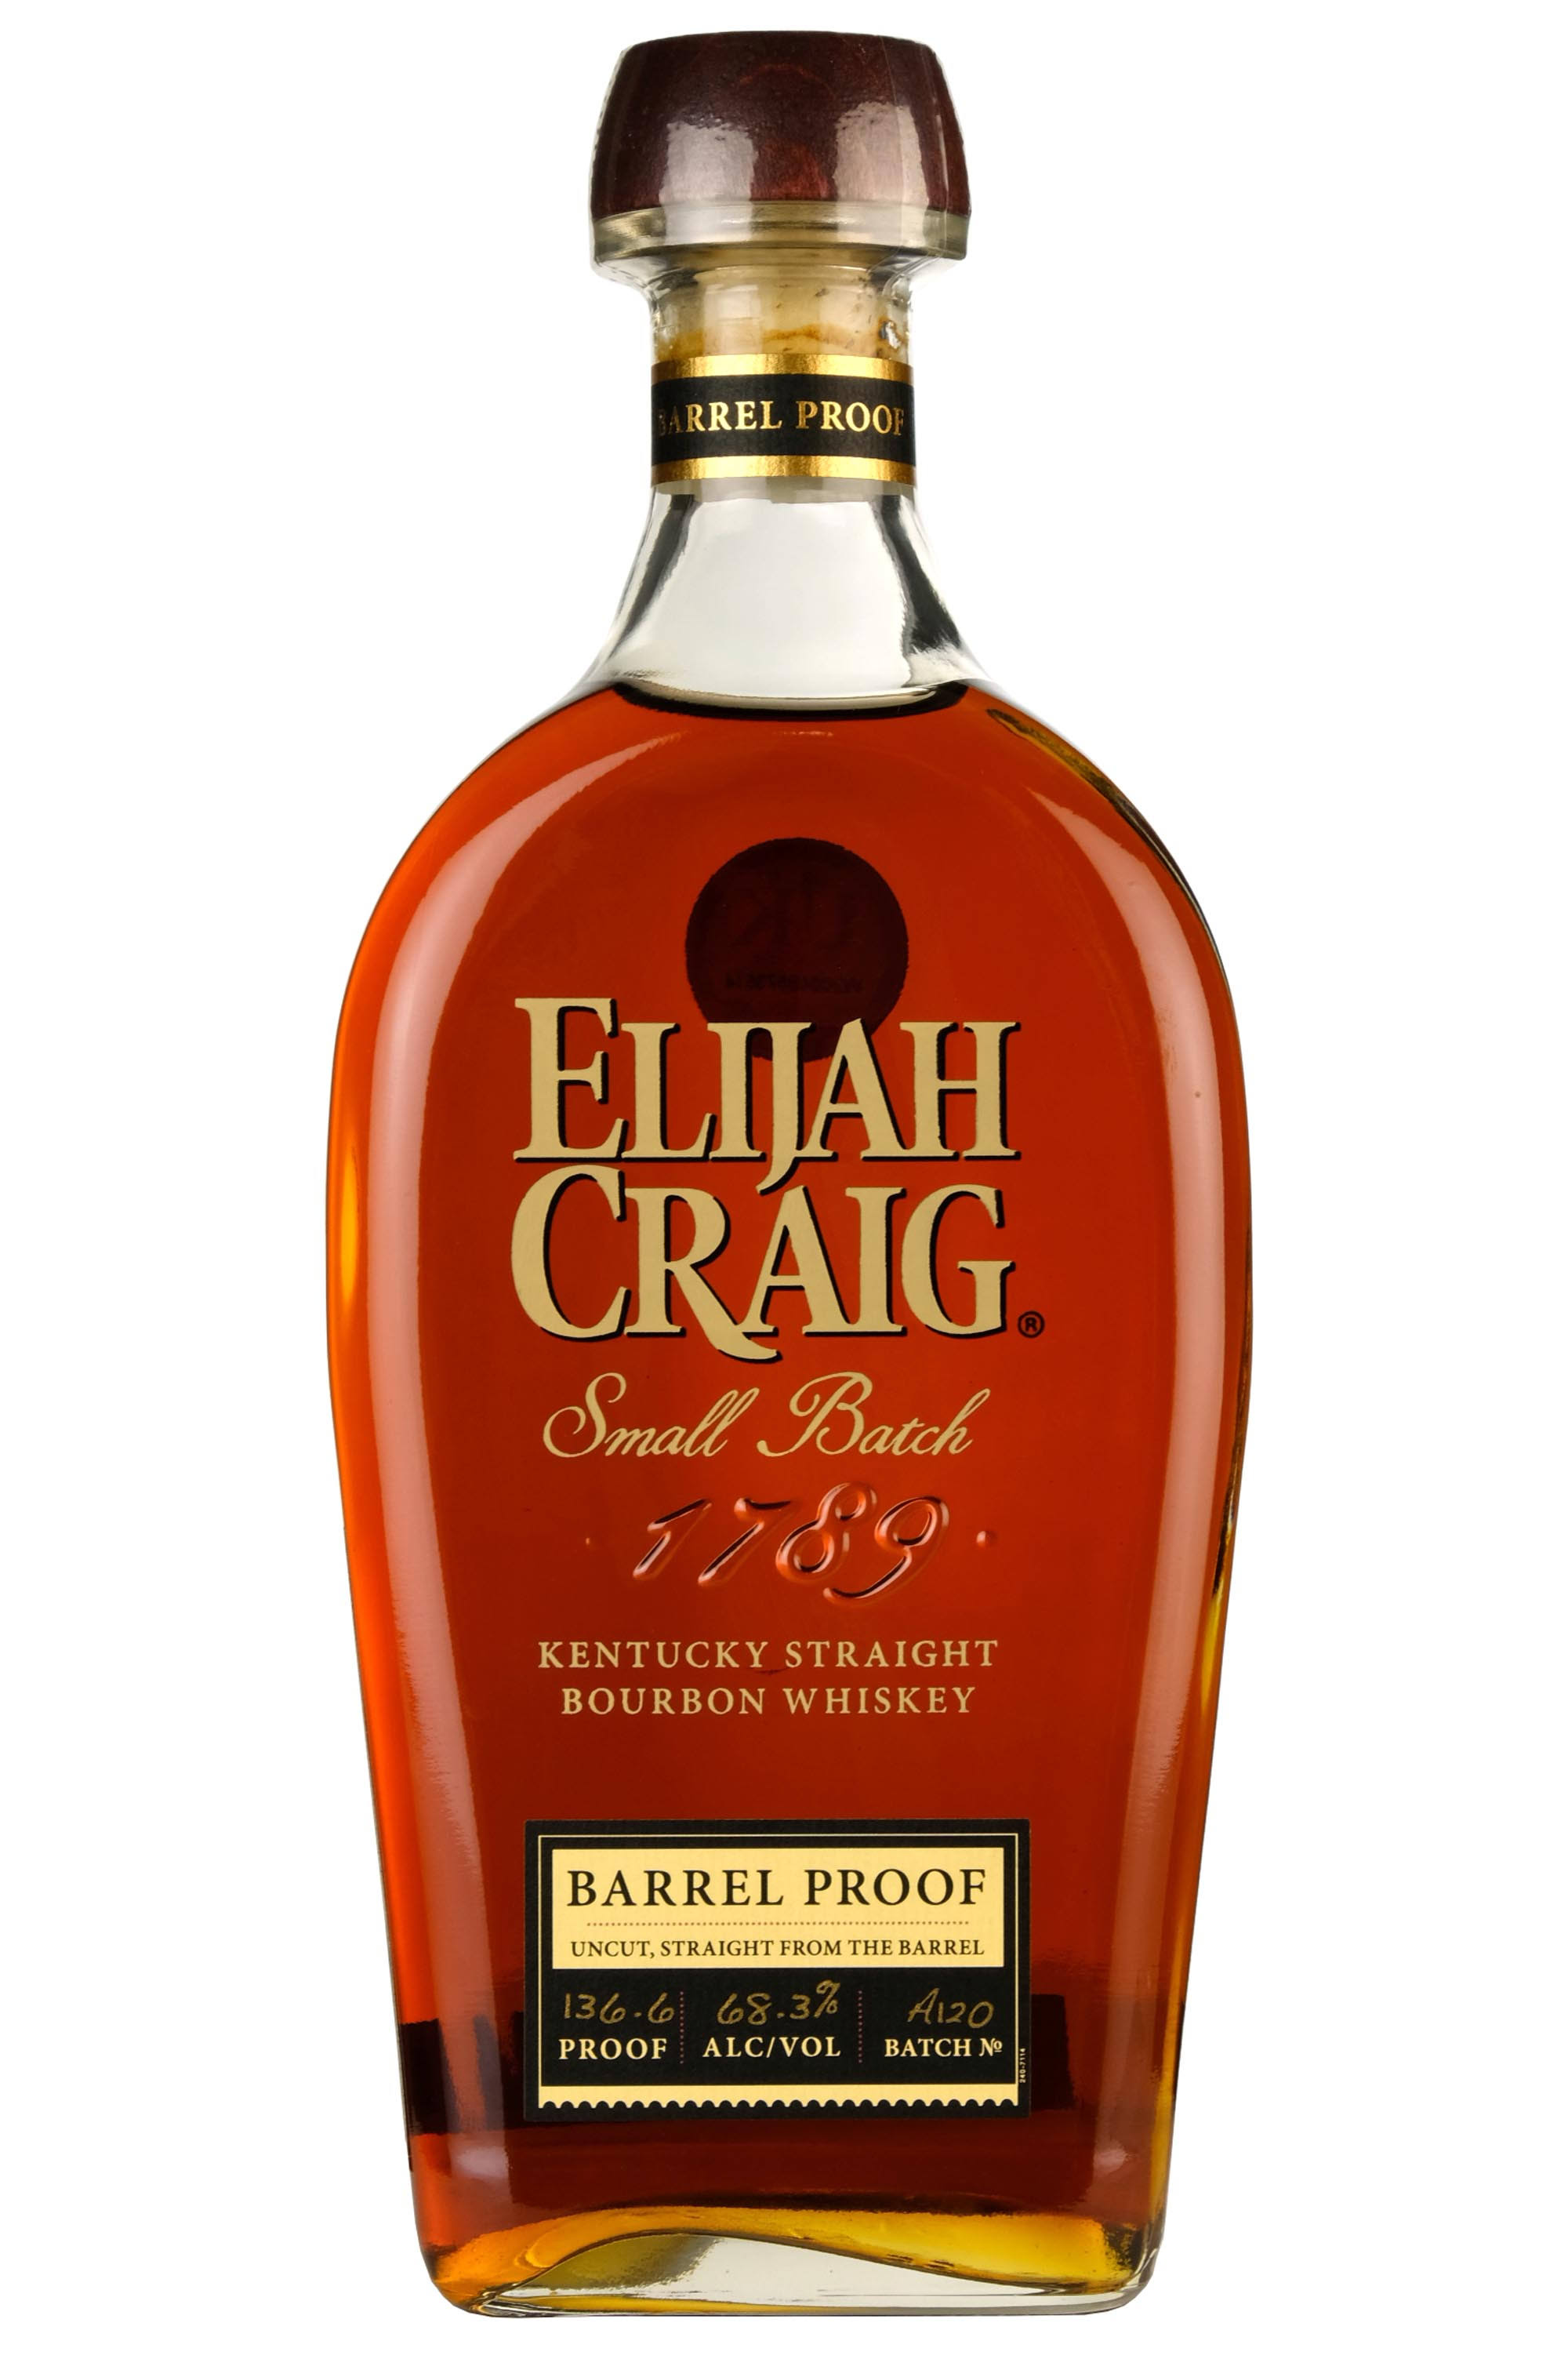 Elijah Craig Barrel Proof Kentucky Straight Bourbon Whiskey